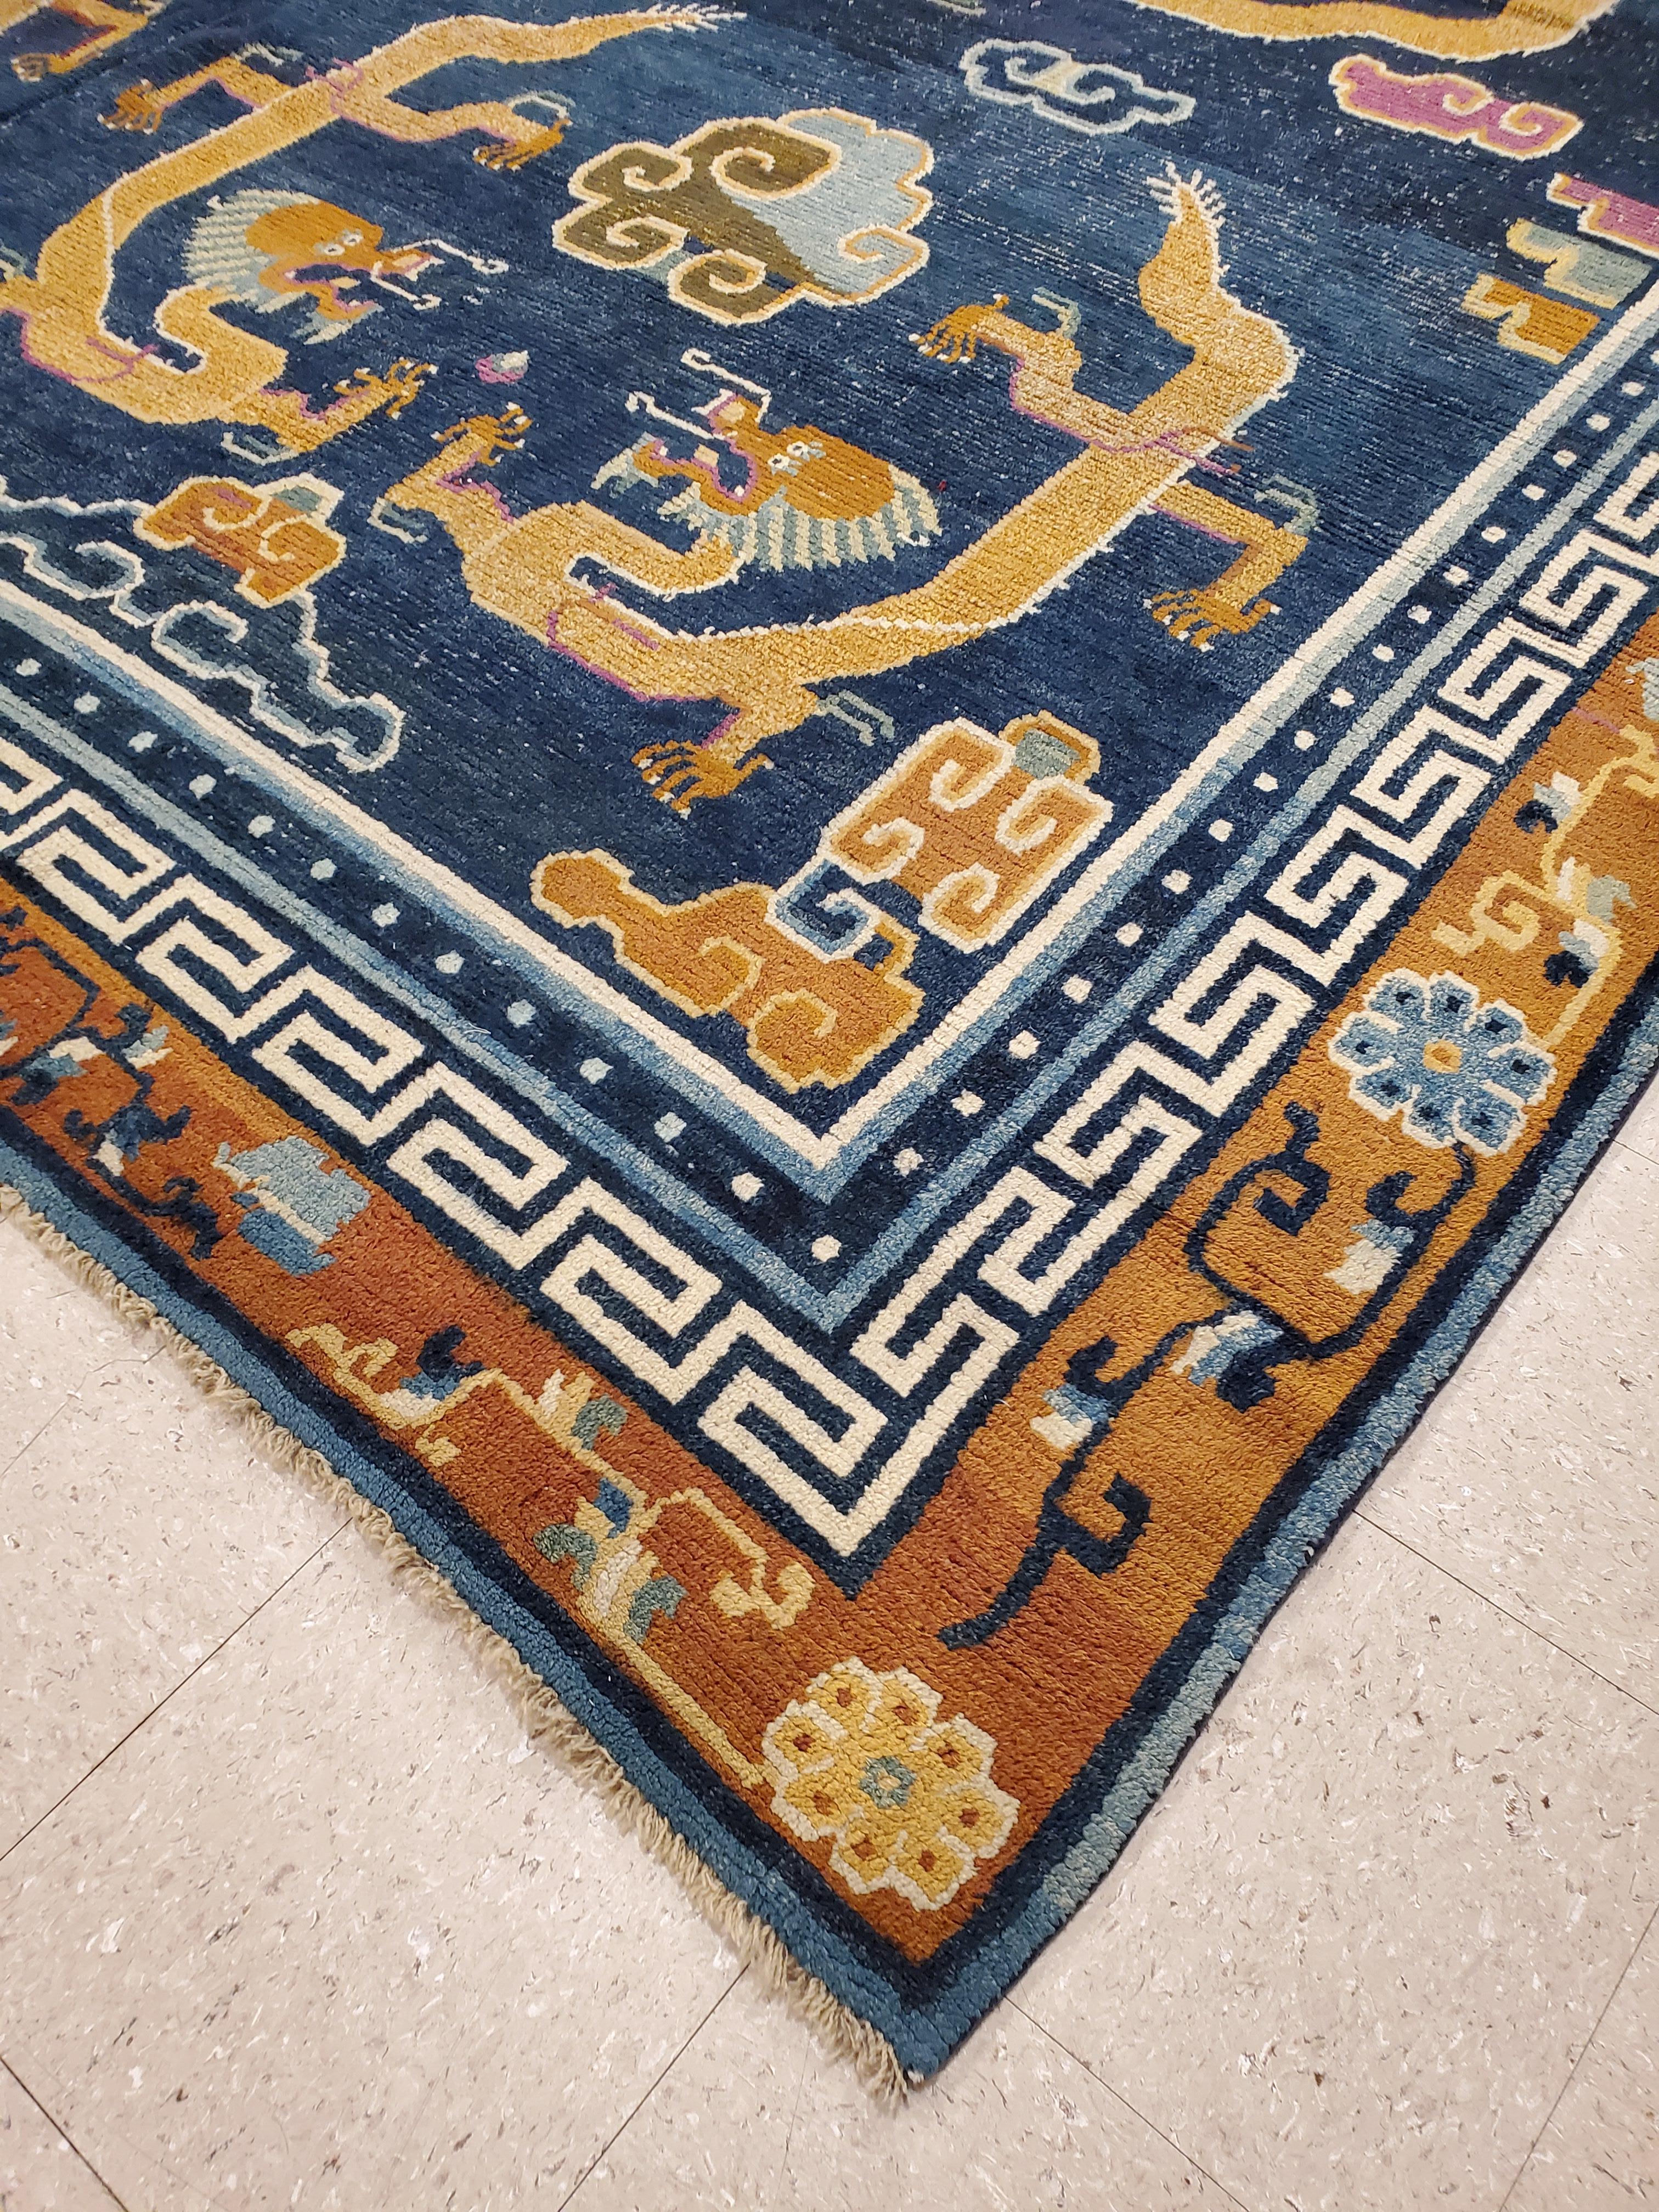 Antique Tibetan Carpet, Circa 1880 Handmade Oriental Rug, Blue, Gold, Tan, Cream 11